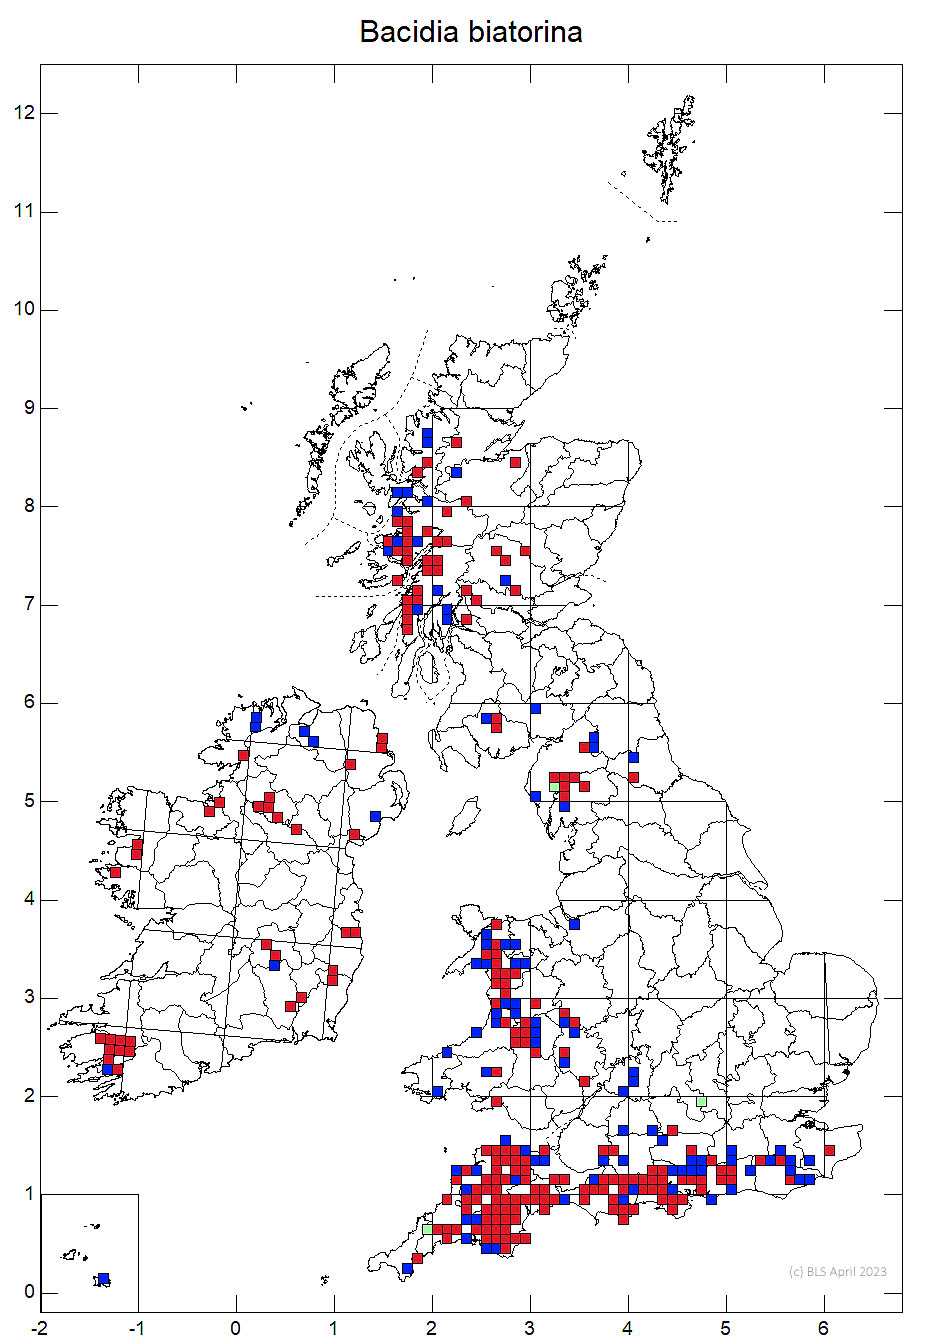 Bacidia biatorina 10km sq distribution map